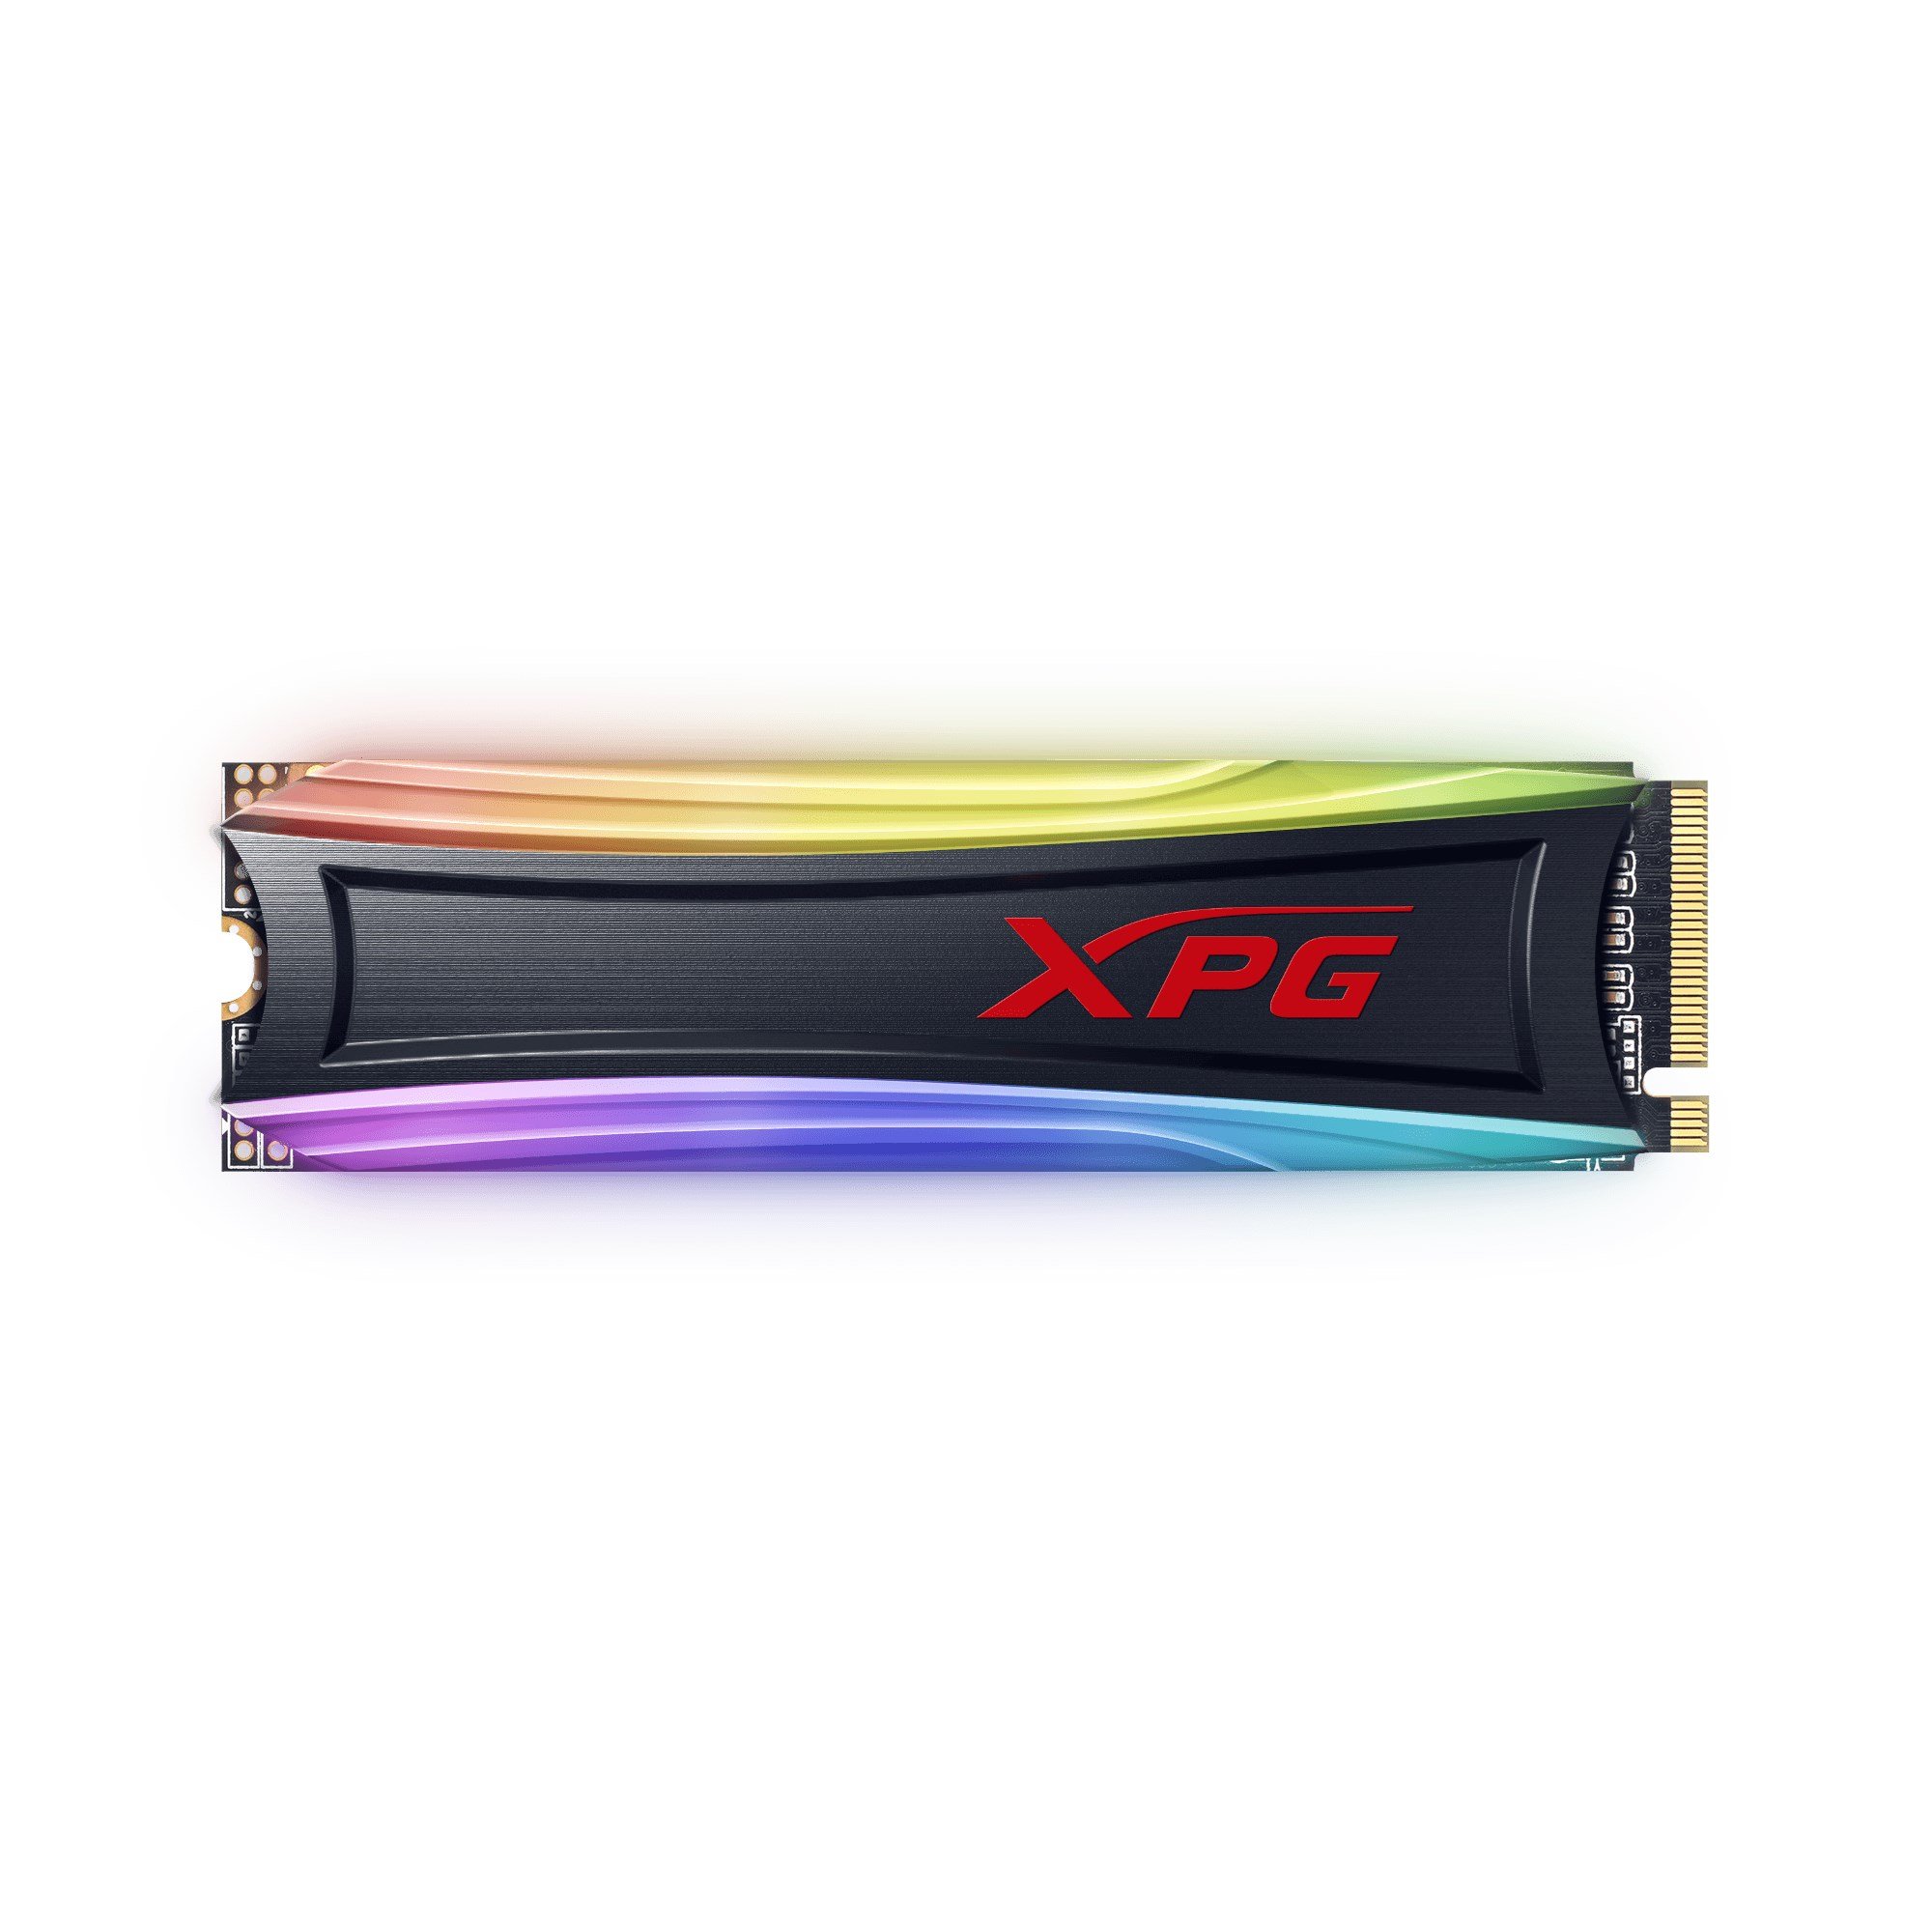 ADATA as40g-256gt-c XPG spectrix RGB s40g SSD 256gb internamente m.2 2280 PCIe 3.0 ~ D ~ 